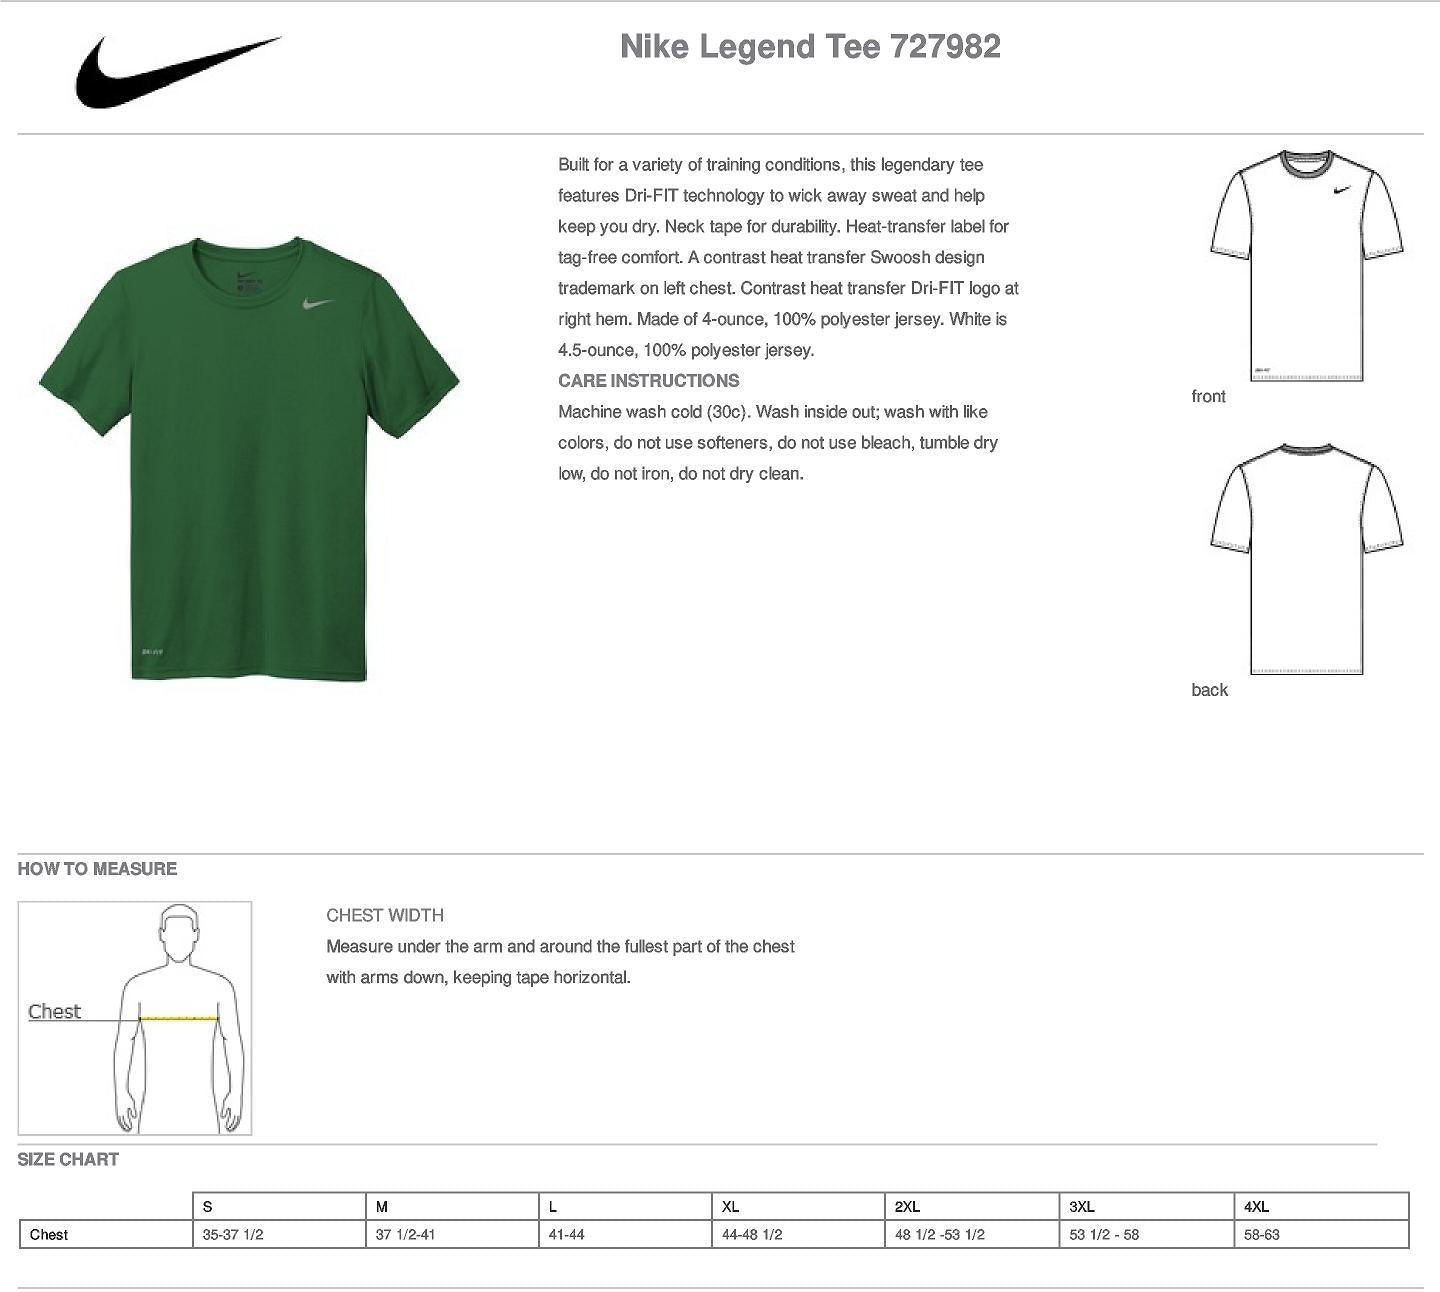 Nike Legend Tee 2402